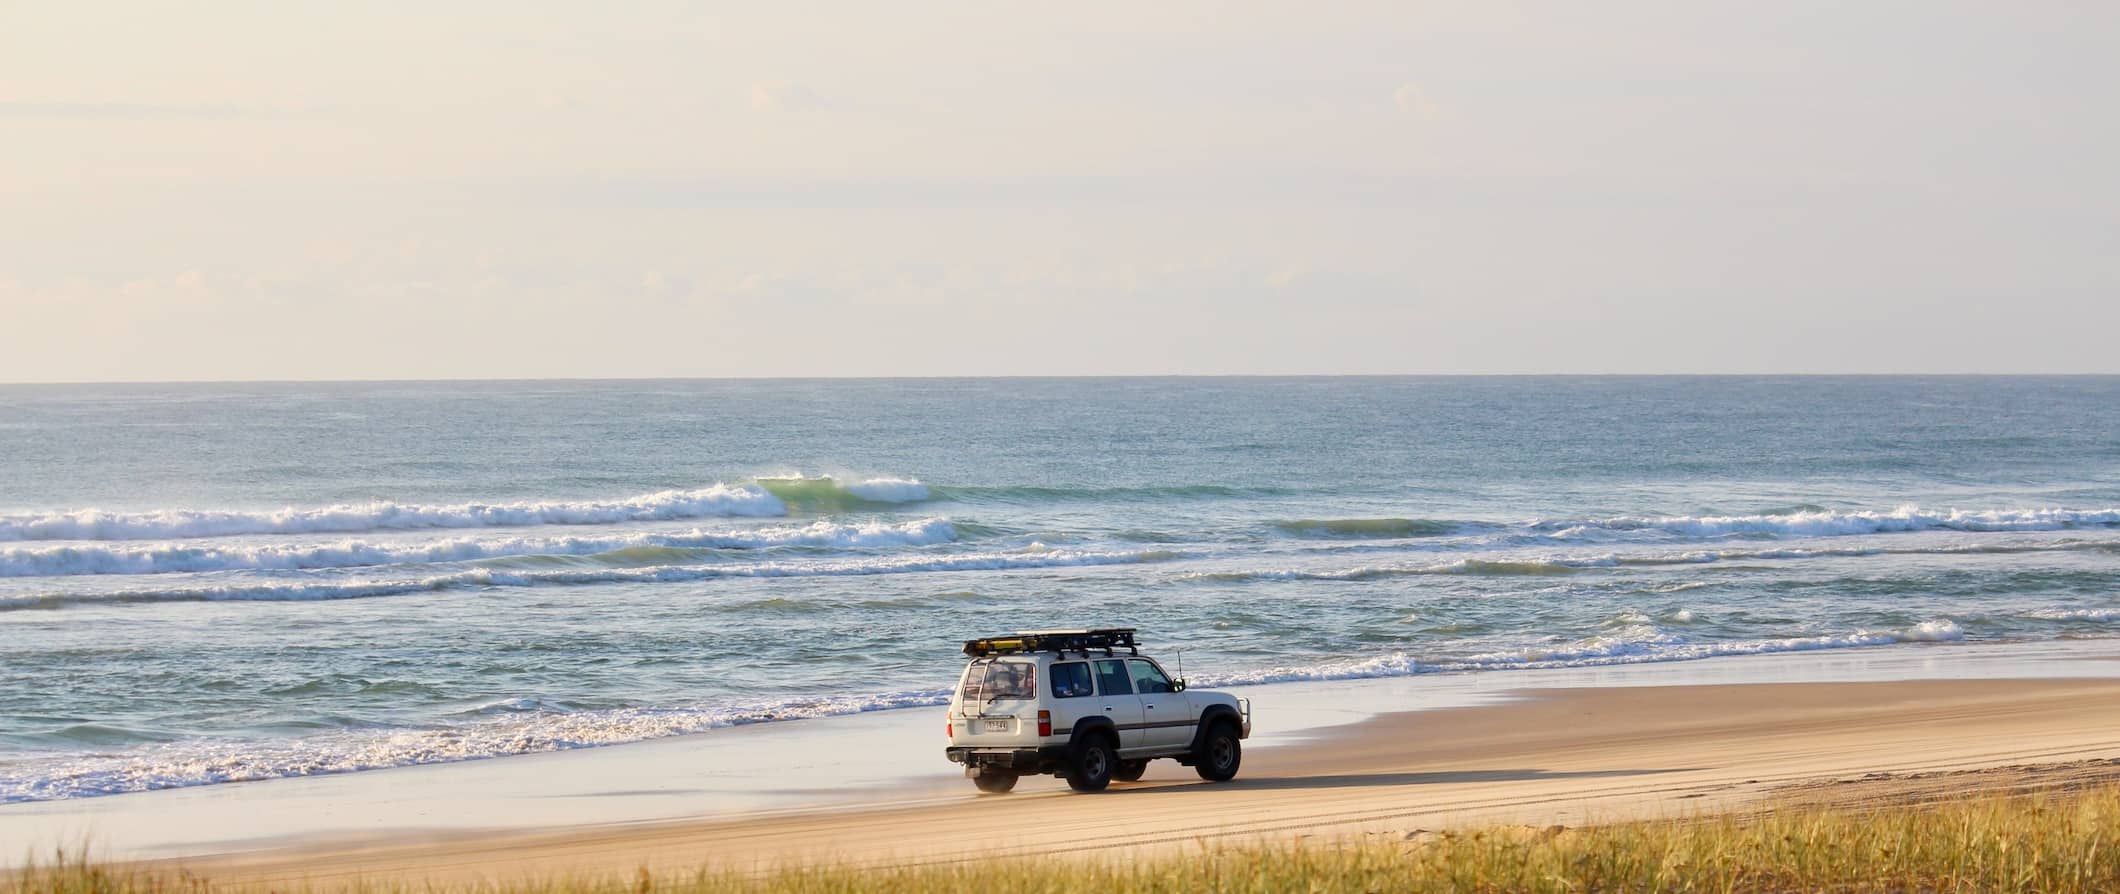 A single 4WD vehicle crusing down the wide, sandy beach of Fraser Island, Australia